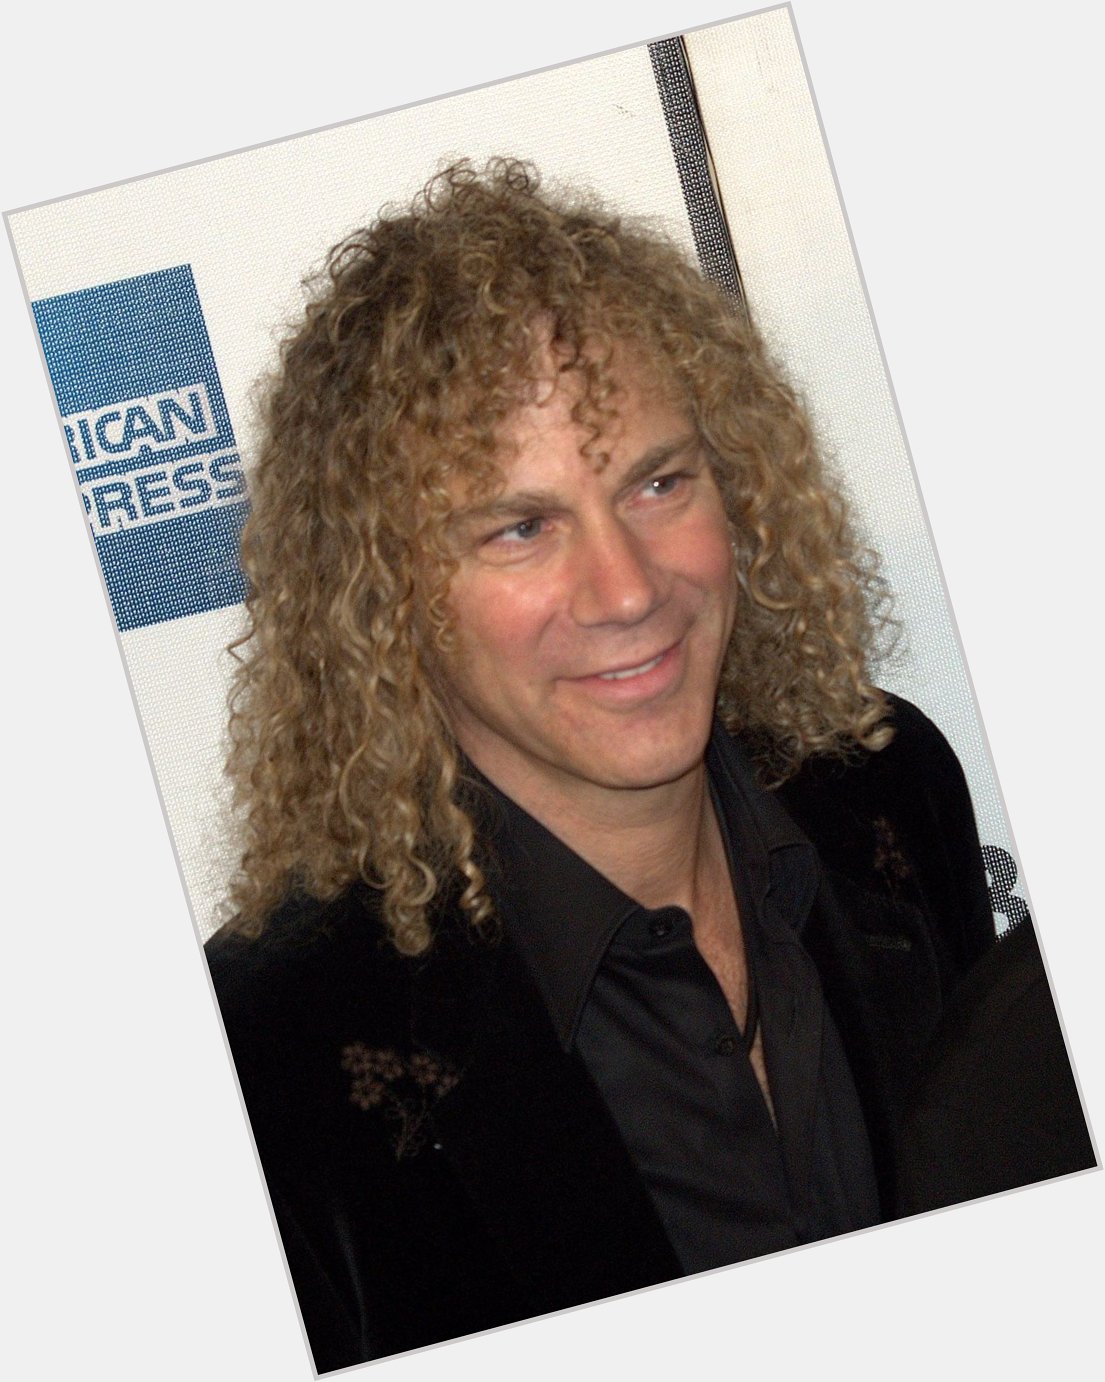 Happy 56th birthday to Bon Jovi keyboardist David Bryan (Perth Amboy, 1962).

Image courtesy of Wikipedia 